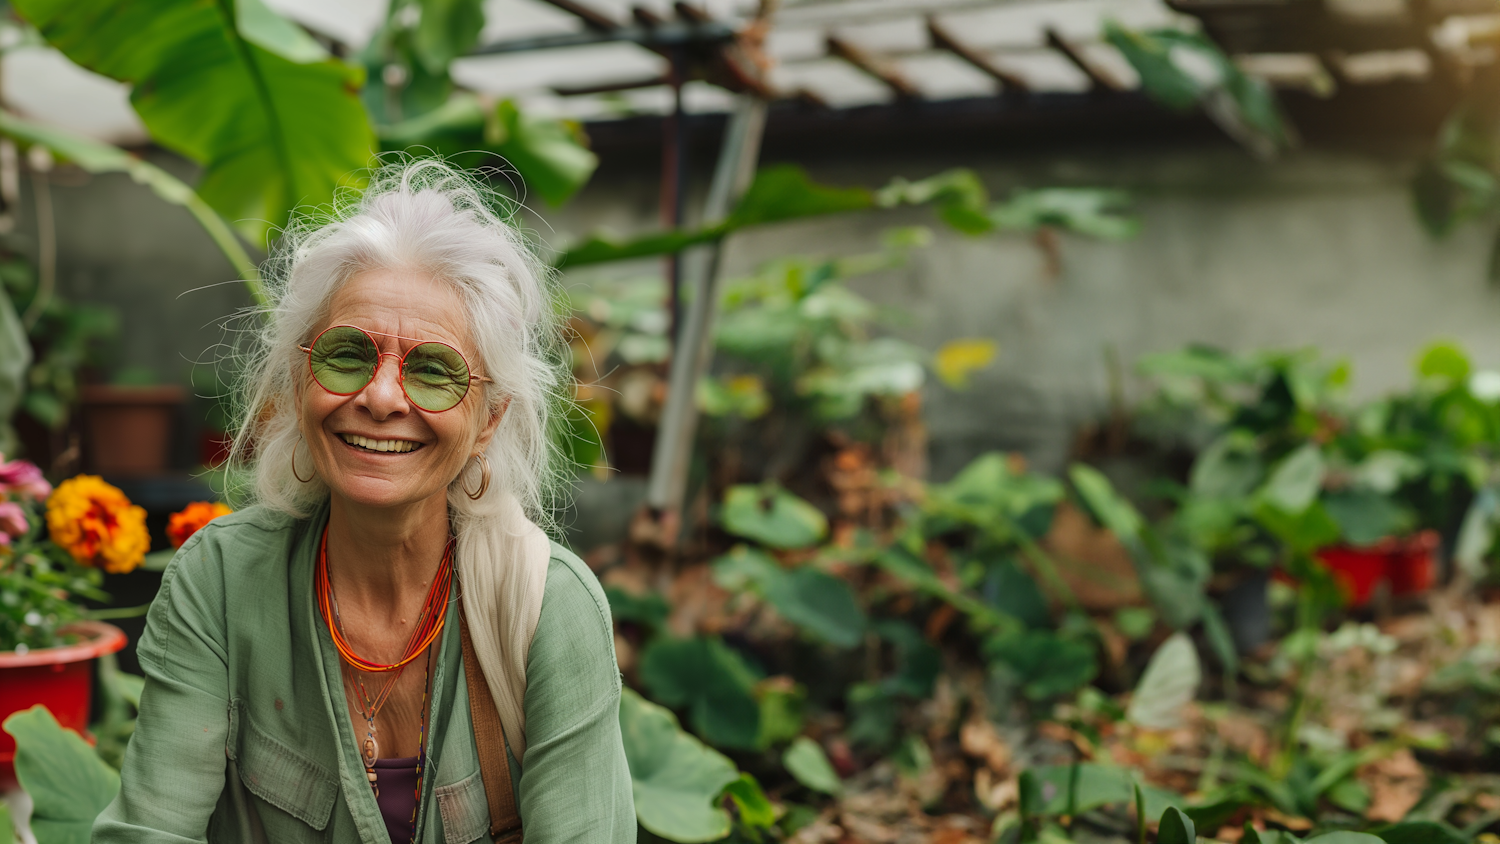 Elderly Woman with Joyful Expression in a Garden